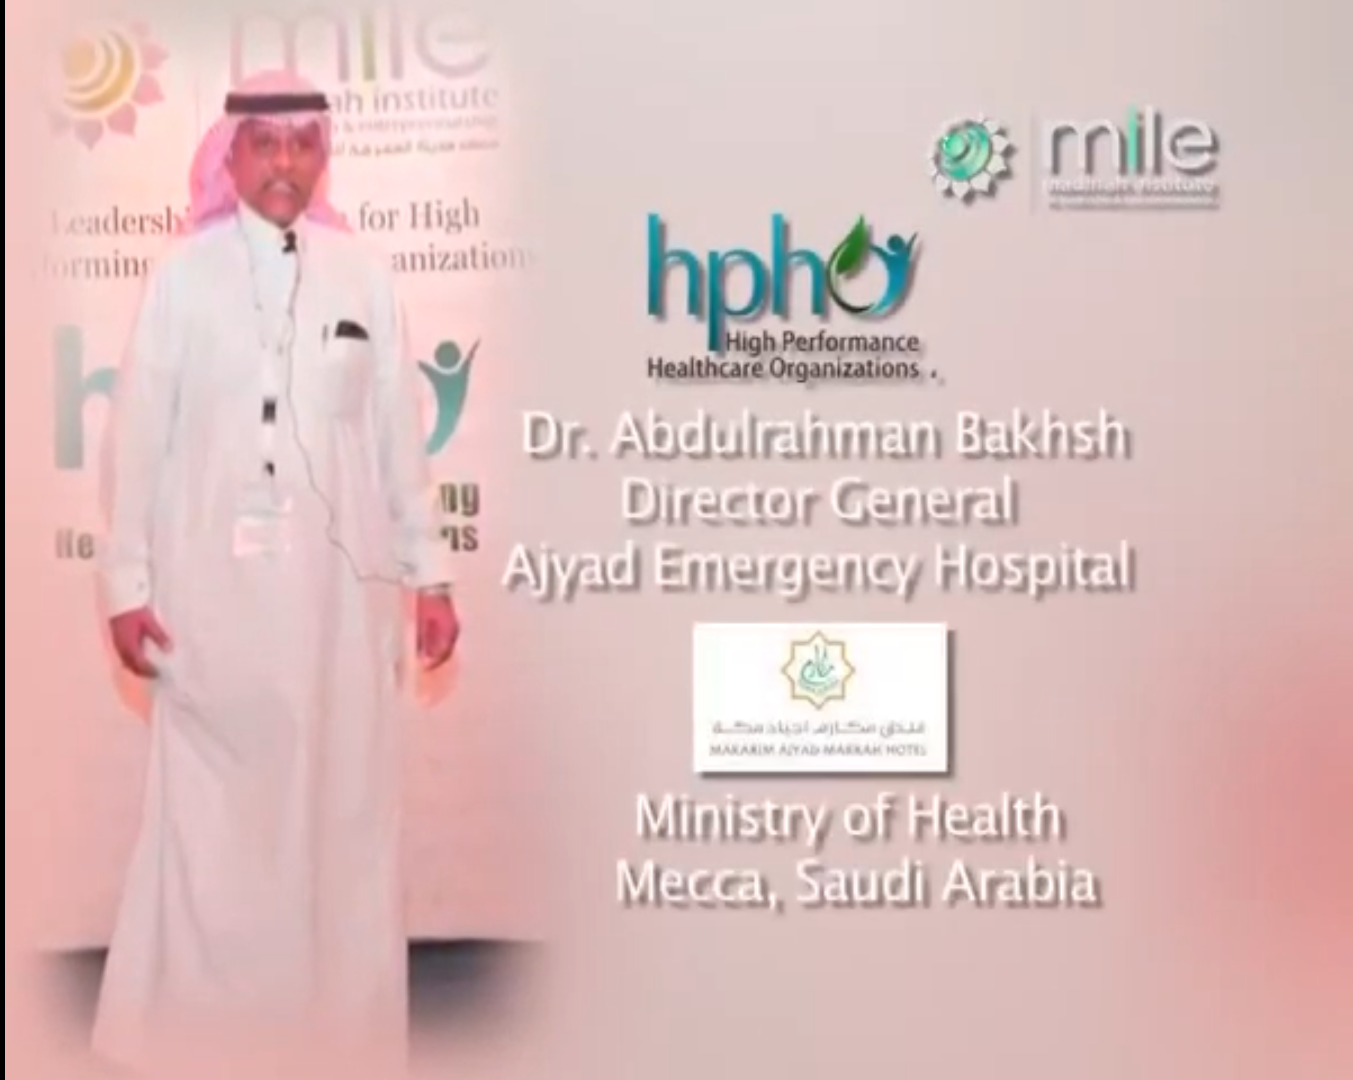 Dr Abdulrahman Bakhsh HPHO | MILE Testimonial